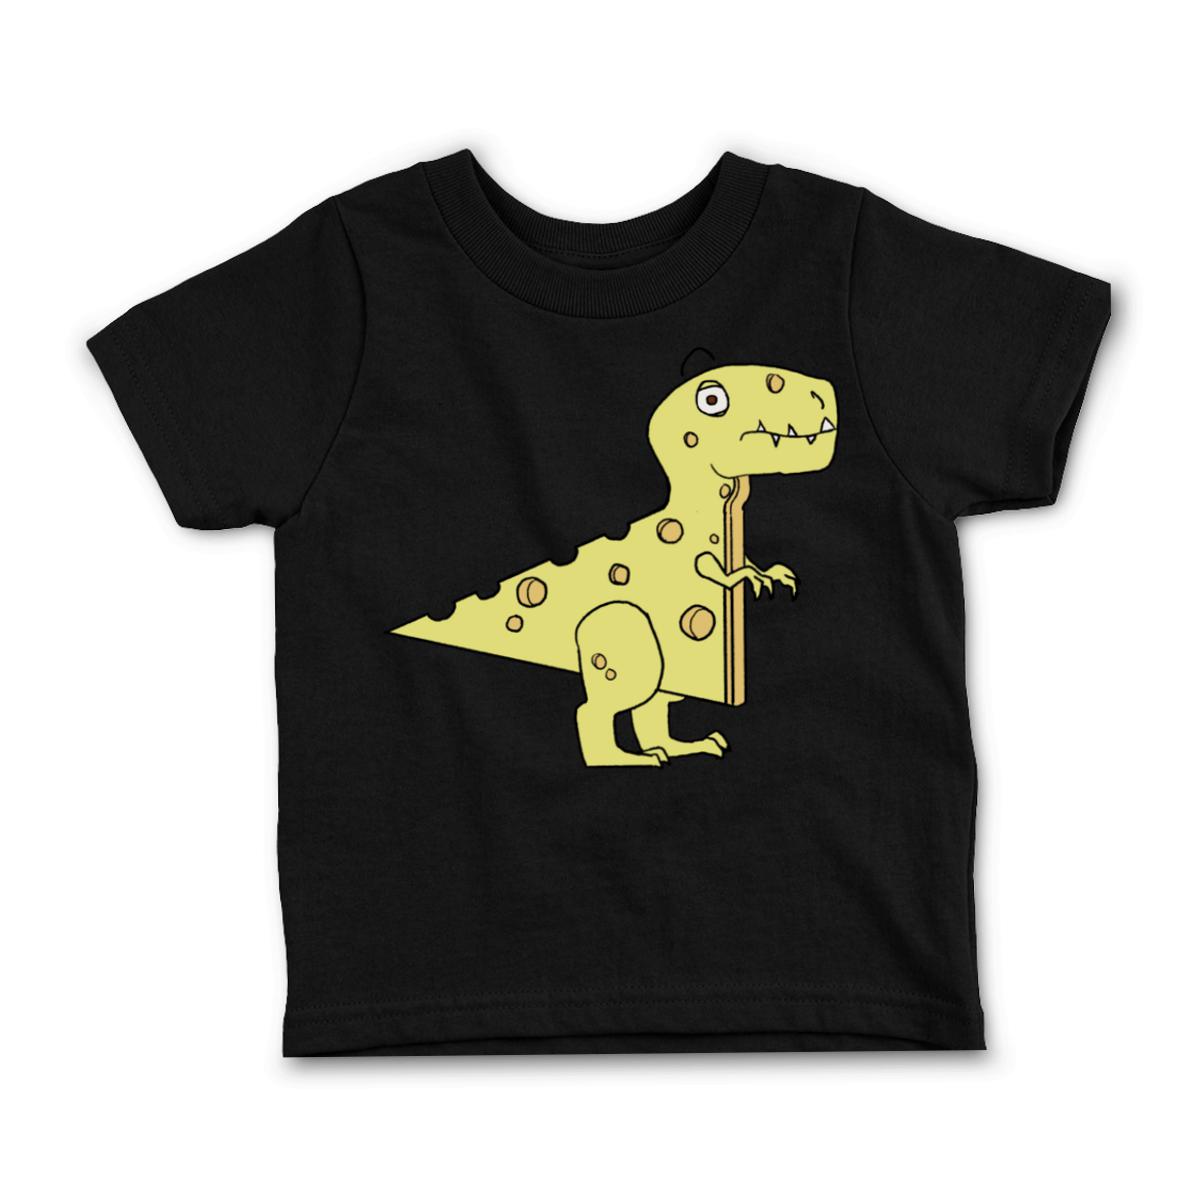 Cheeseosaurus Rex Toddler Tee 4T black